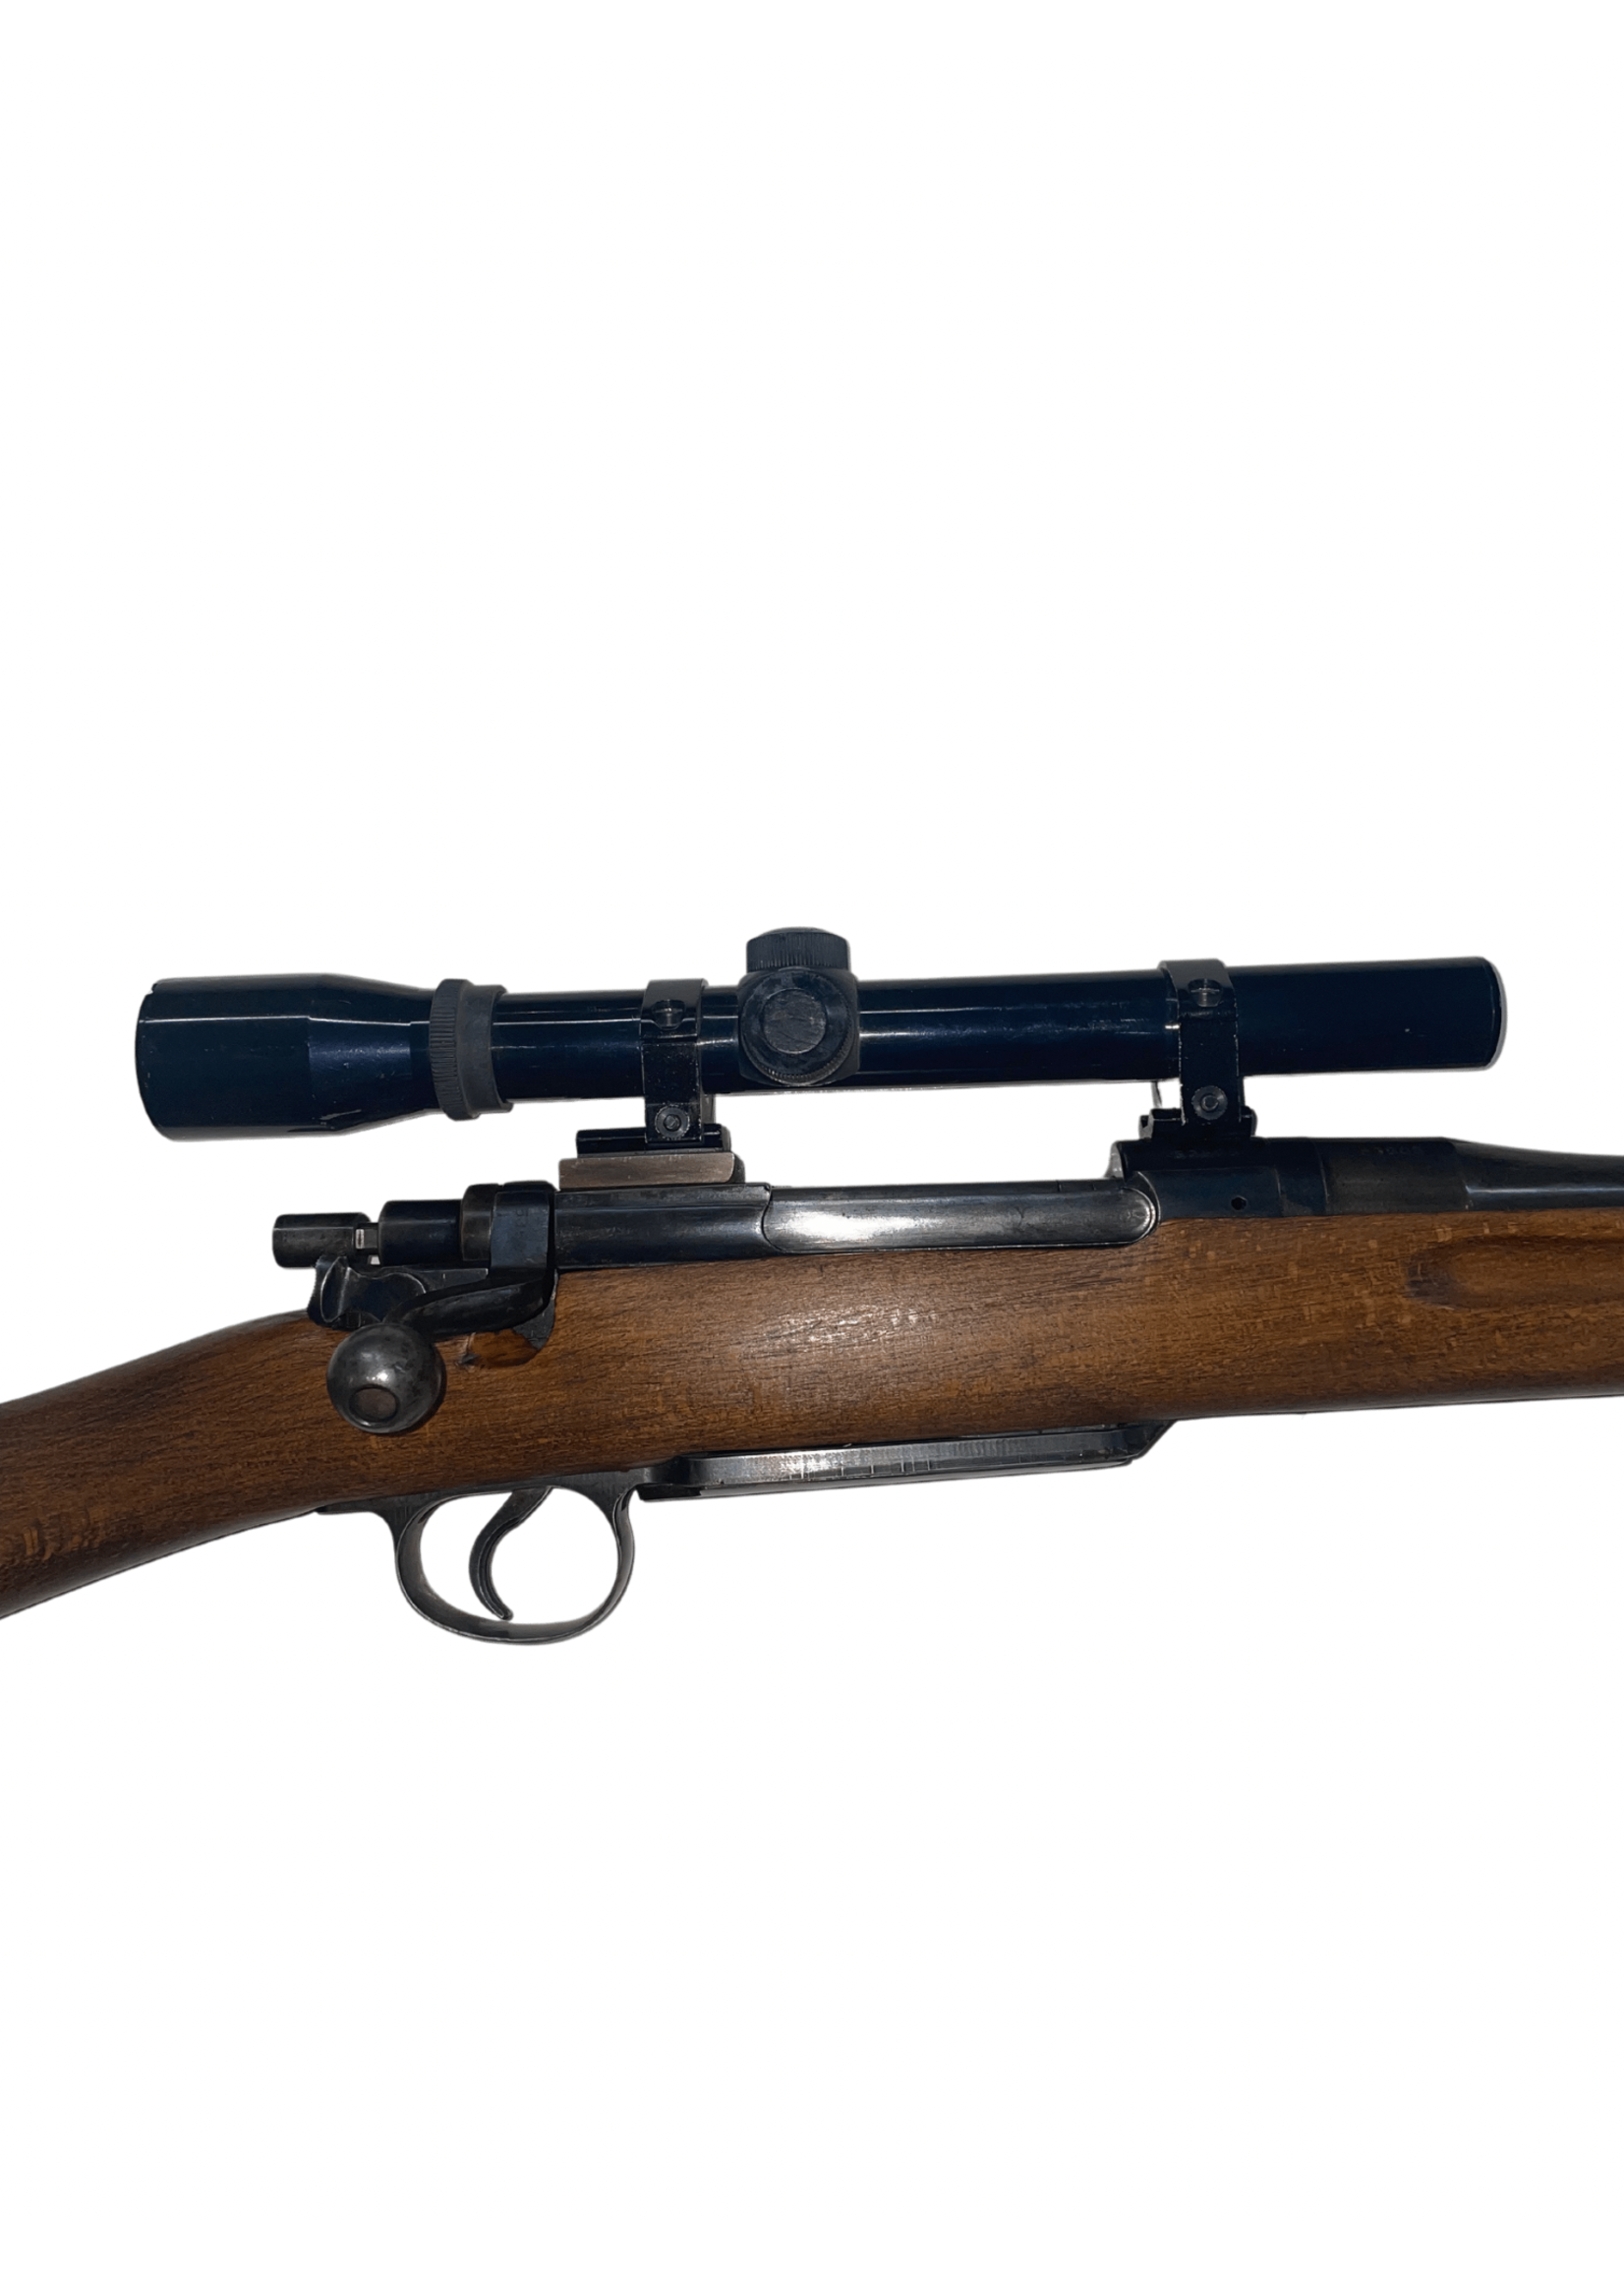 USED 303 BRITISH SWEDISH MAUSER M96 “SPORTERIZED” BOLT W/SCOPE & AMMO